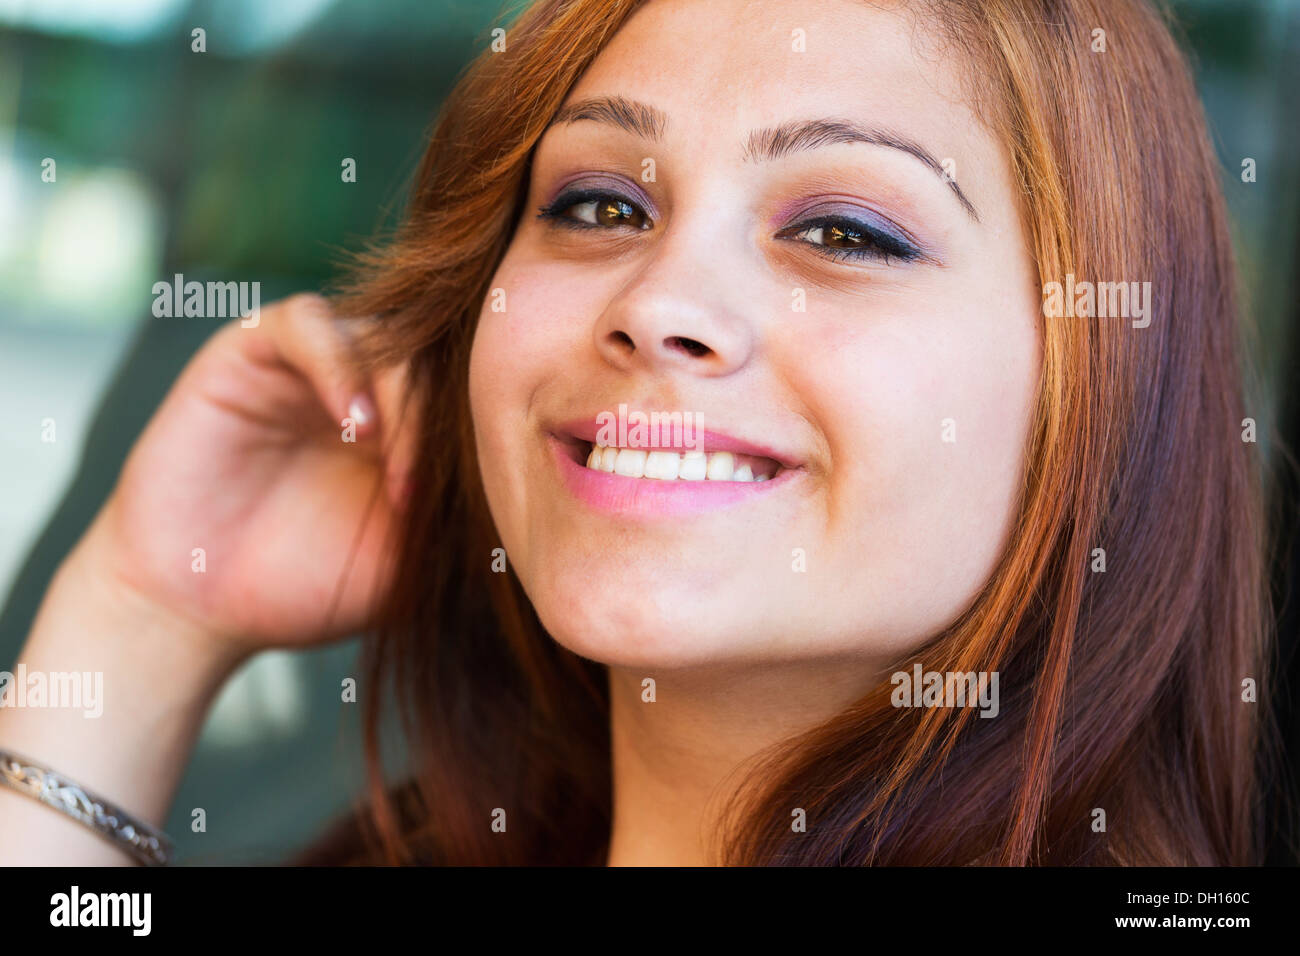 Hispanic girl smiling Banque D'Images